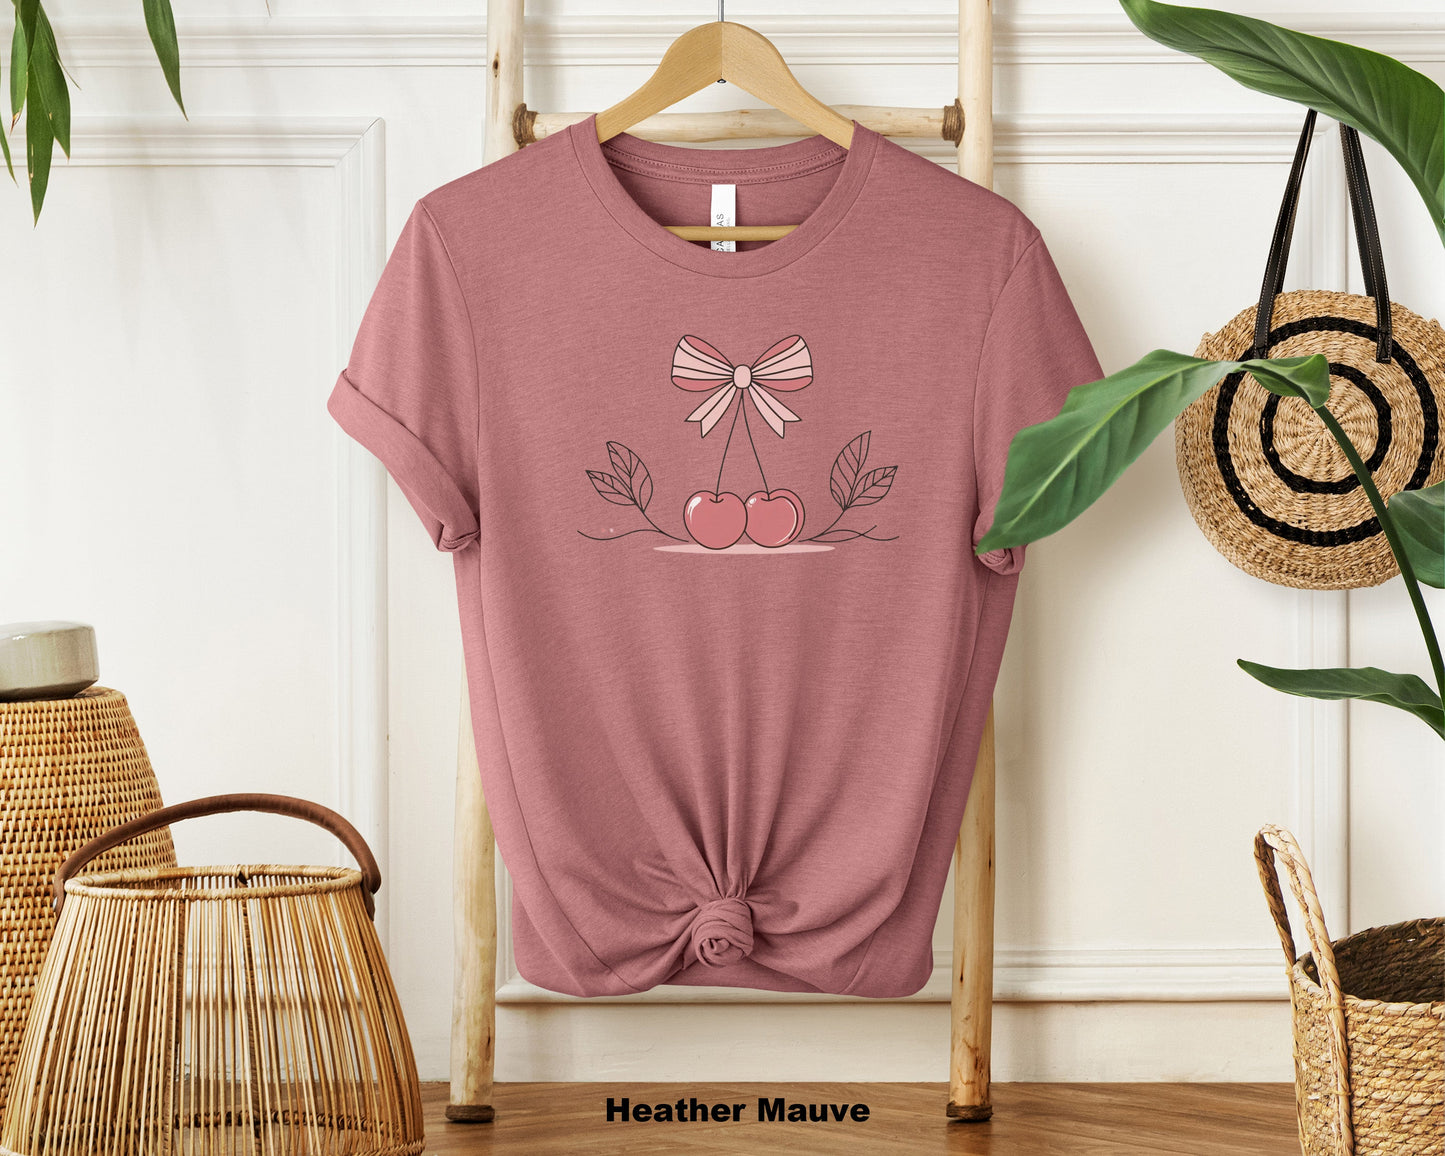 "Cherry Bow Pink Line Art Minimalist T-Shirt for Women - Trendy Soft Cotton Tee"